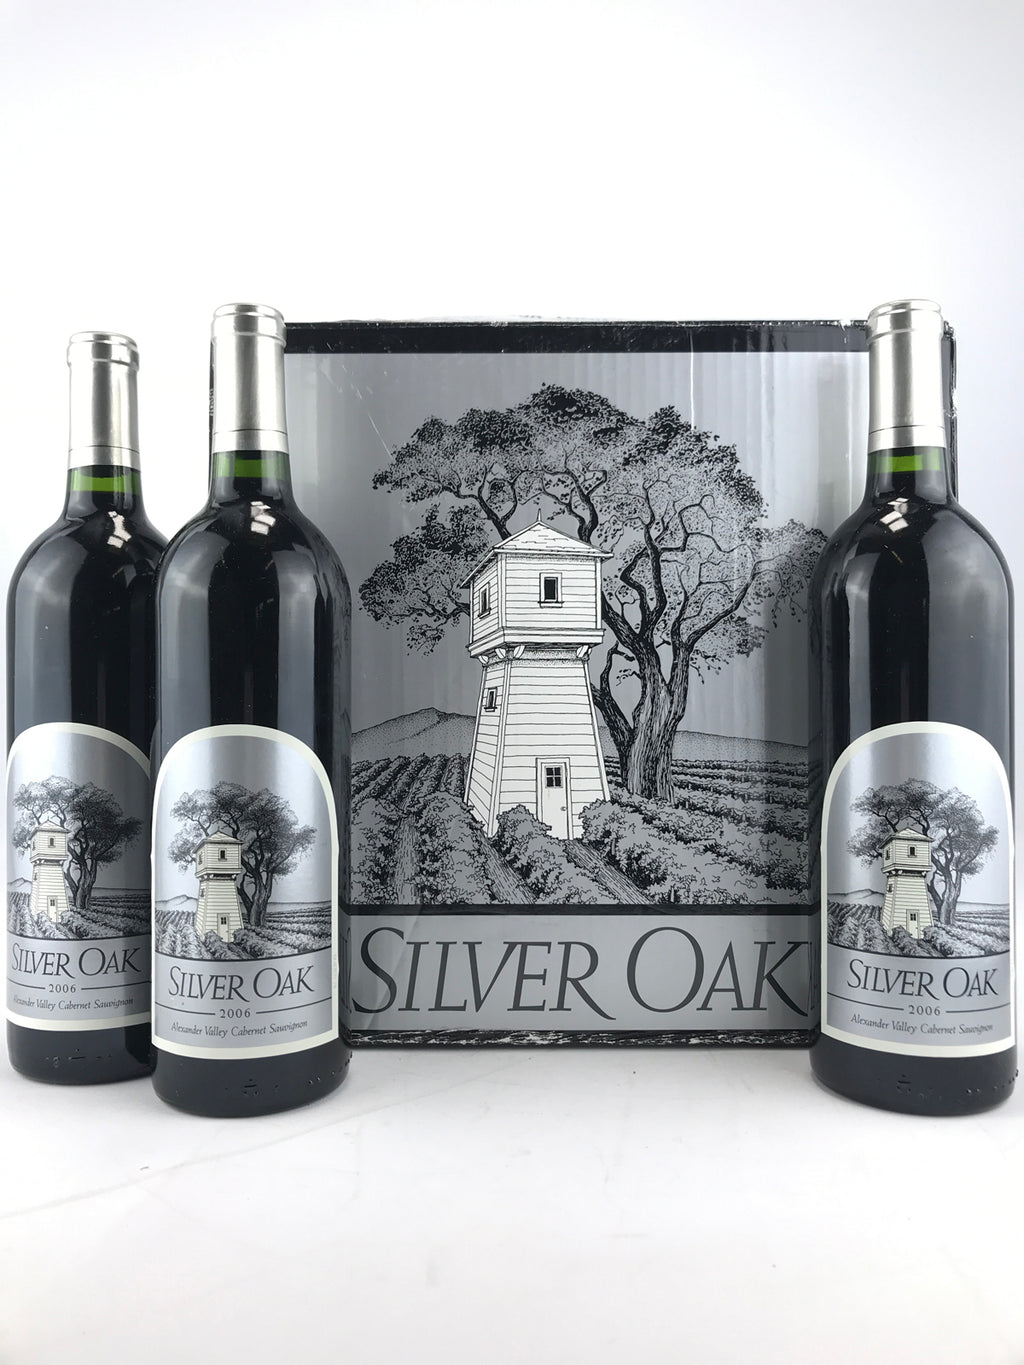 2006 Silver Oak, Cabernet Sauvignon, Alexander Valley, Case of 12 btls